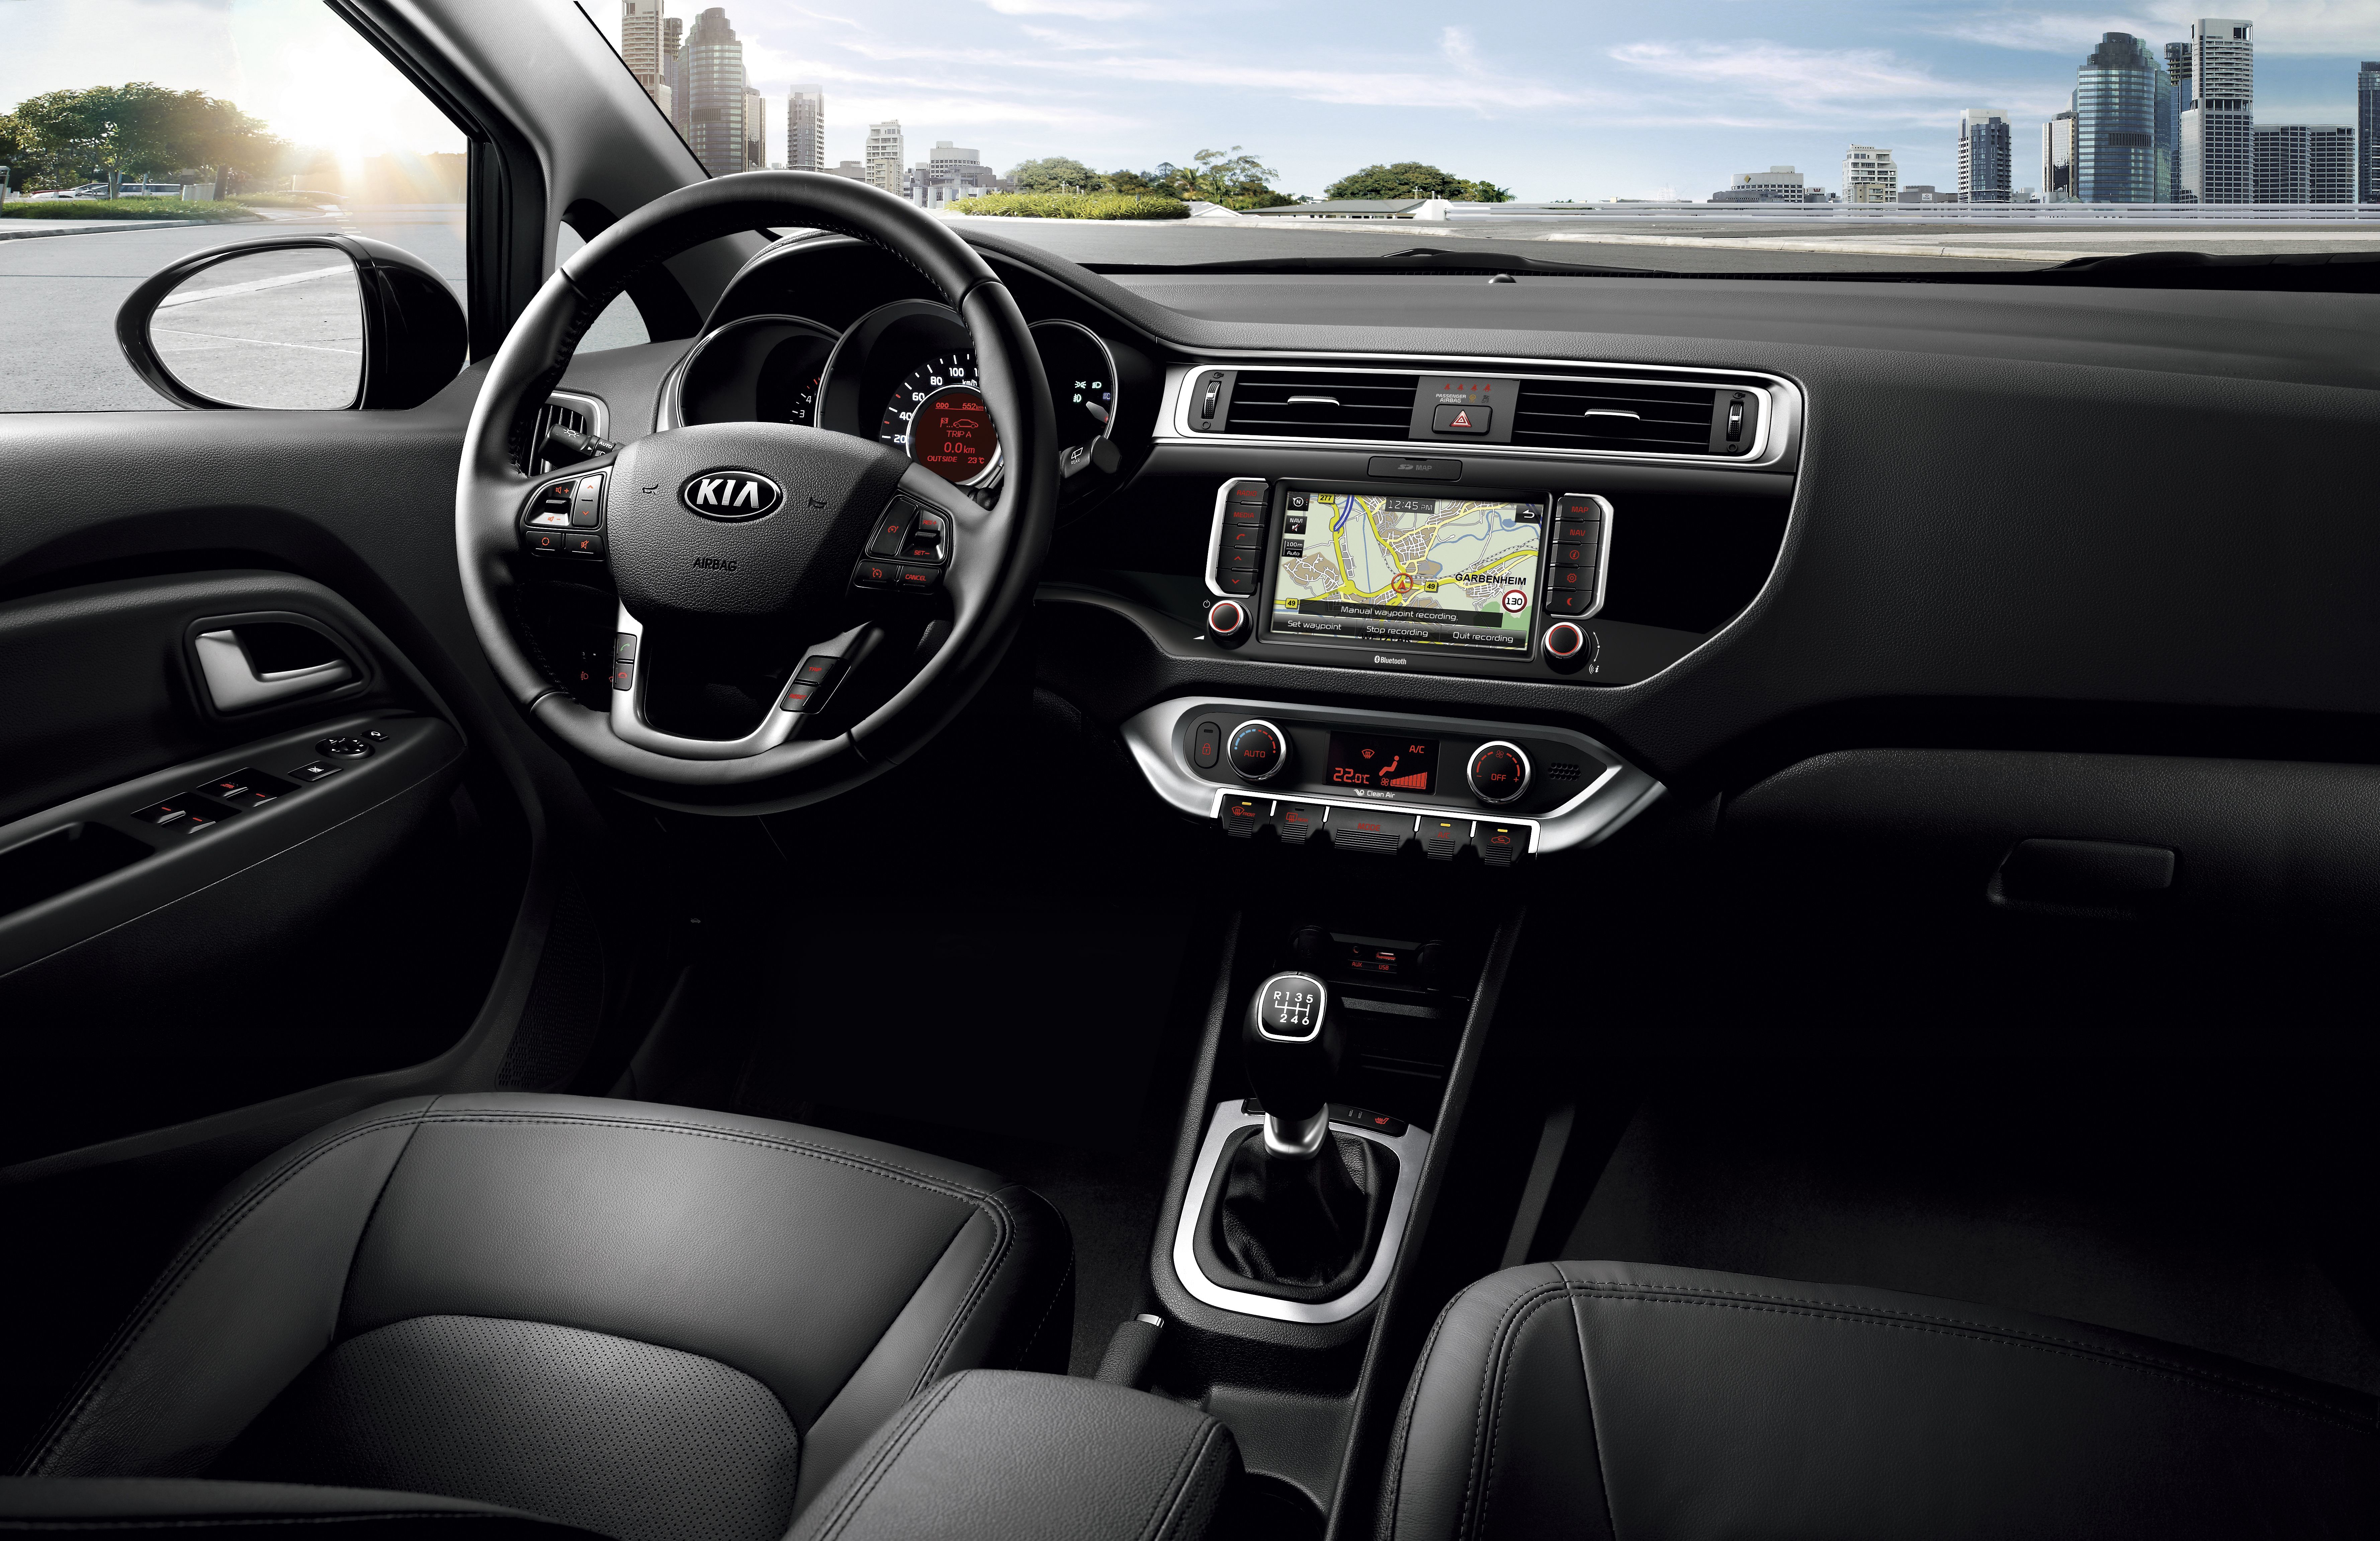 KIA Cerato Hatchback interior specifications